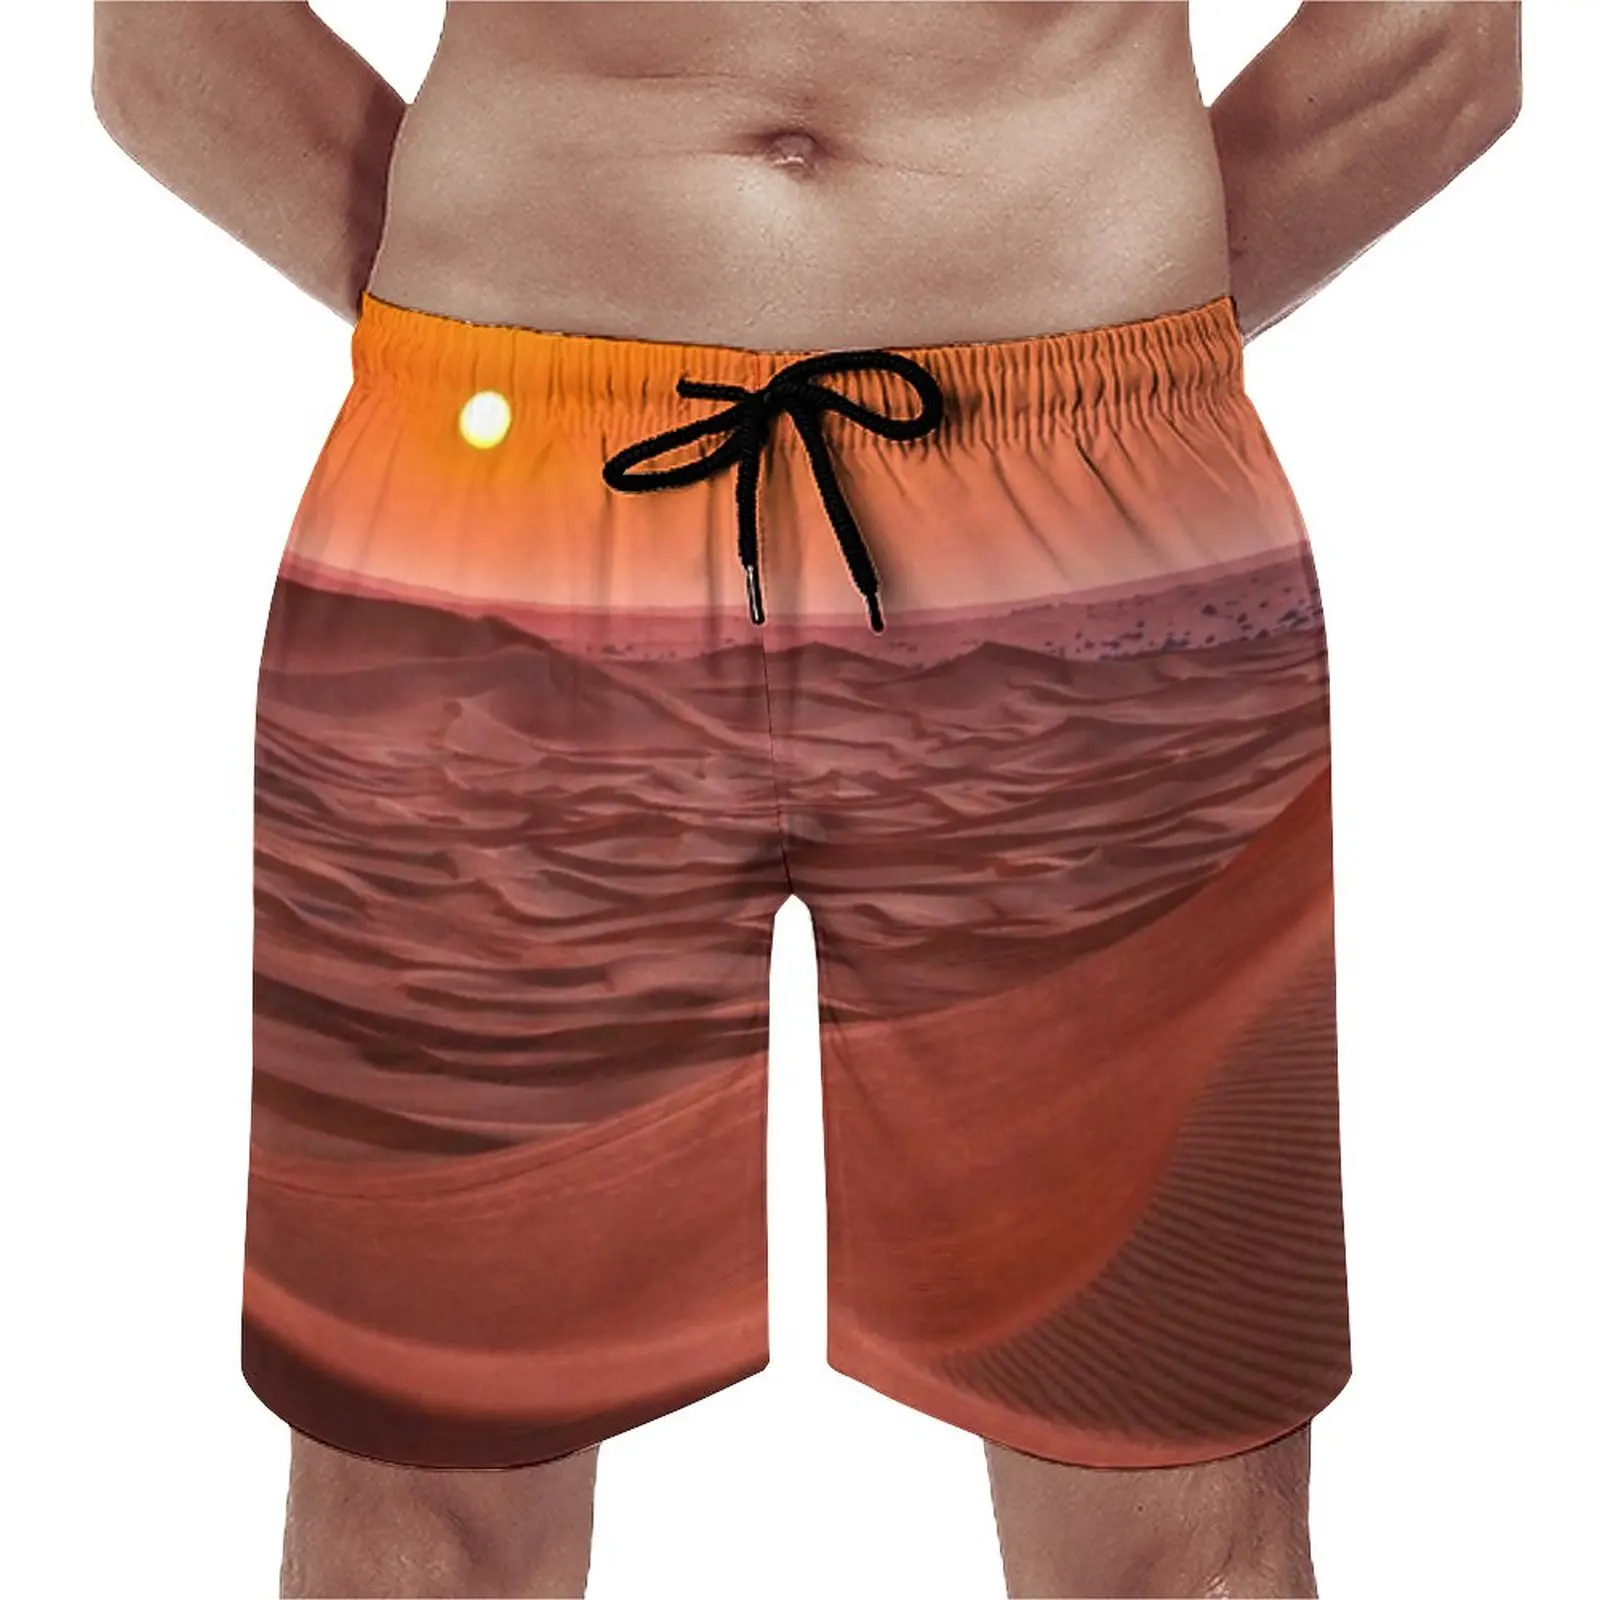 

Desert Landscape Gym Shorts Sand Dune Hawaii Beach Short Pants Males Custom Running Surf Quick Dry Swimming Trunks Gift Idea